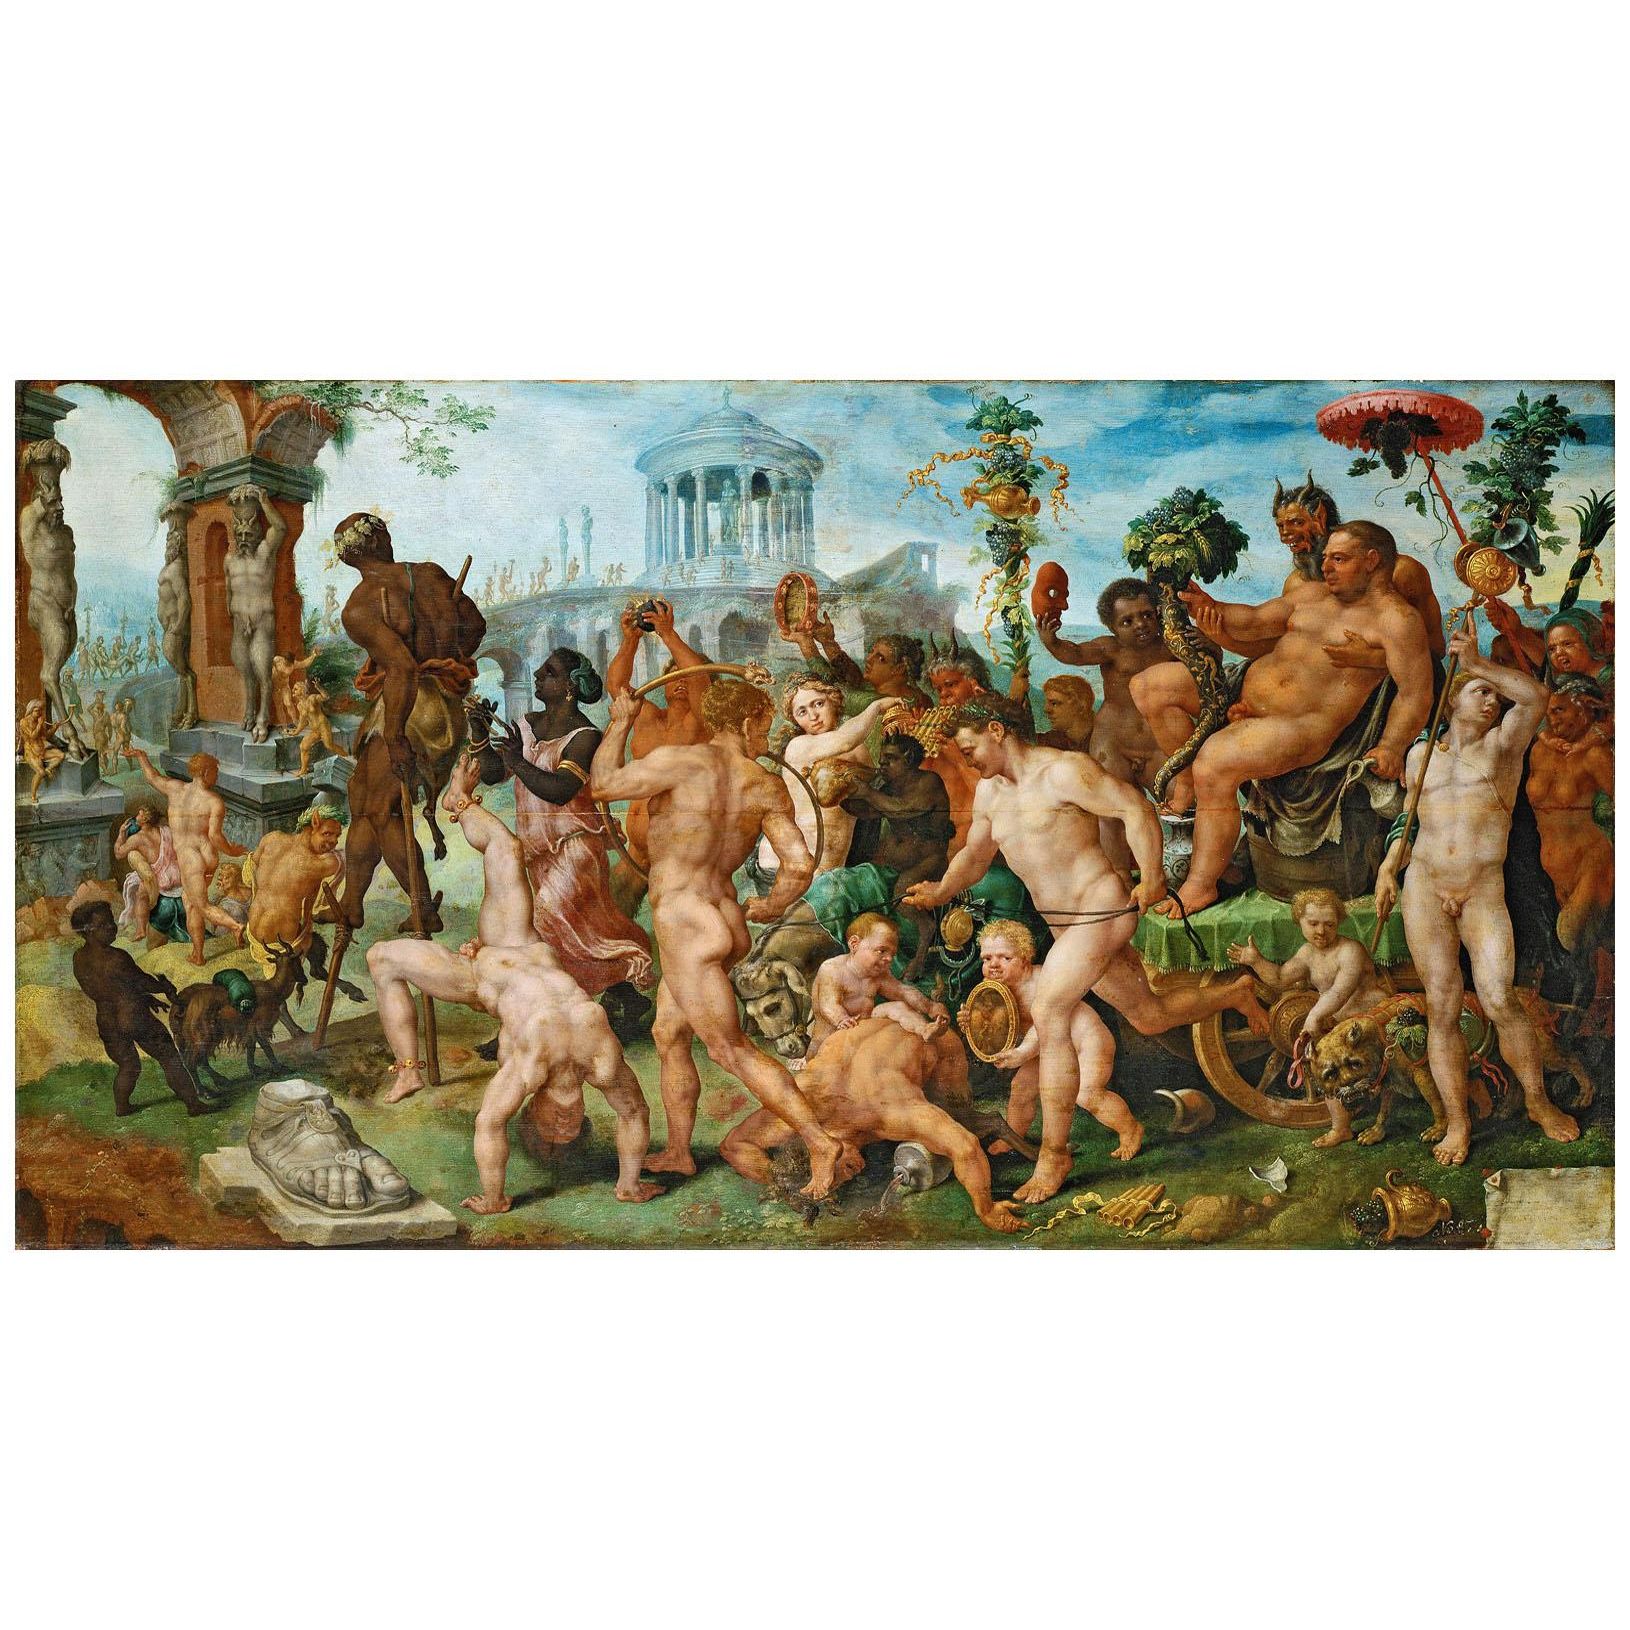 Maarten van Heemskerck. The Triumphal Procession of Bacchus. 1537. KHM Wien